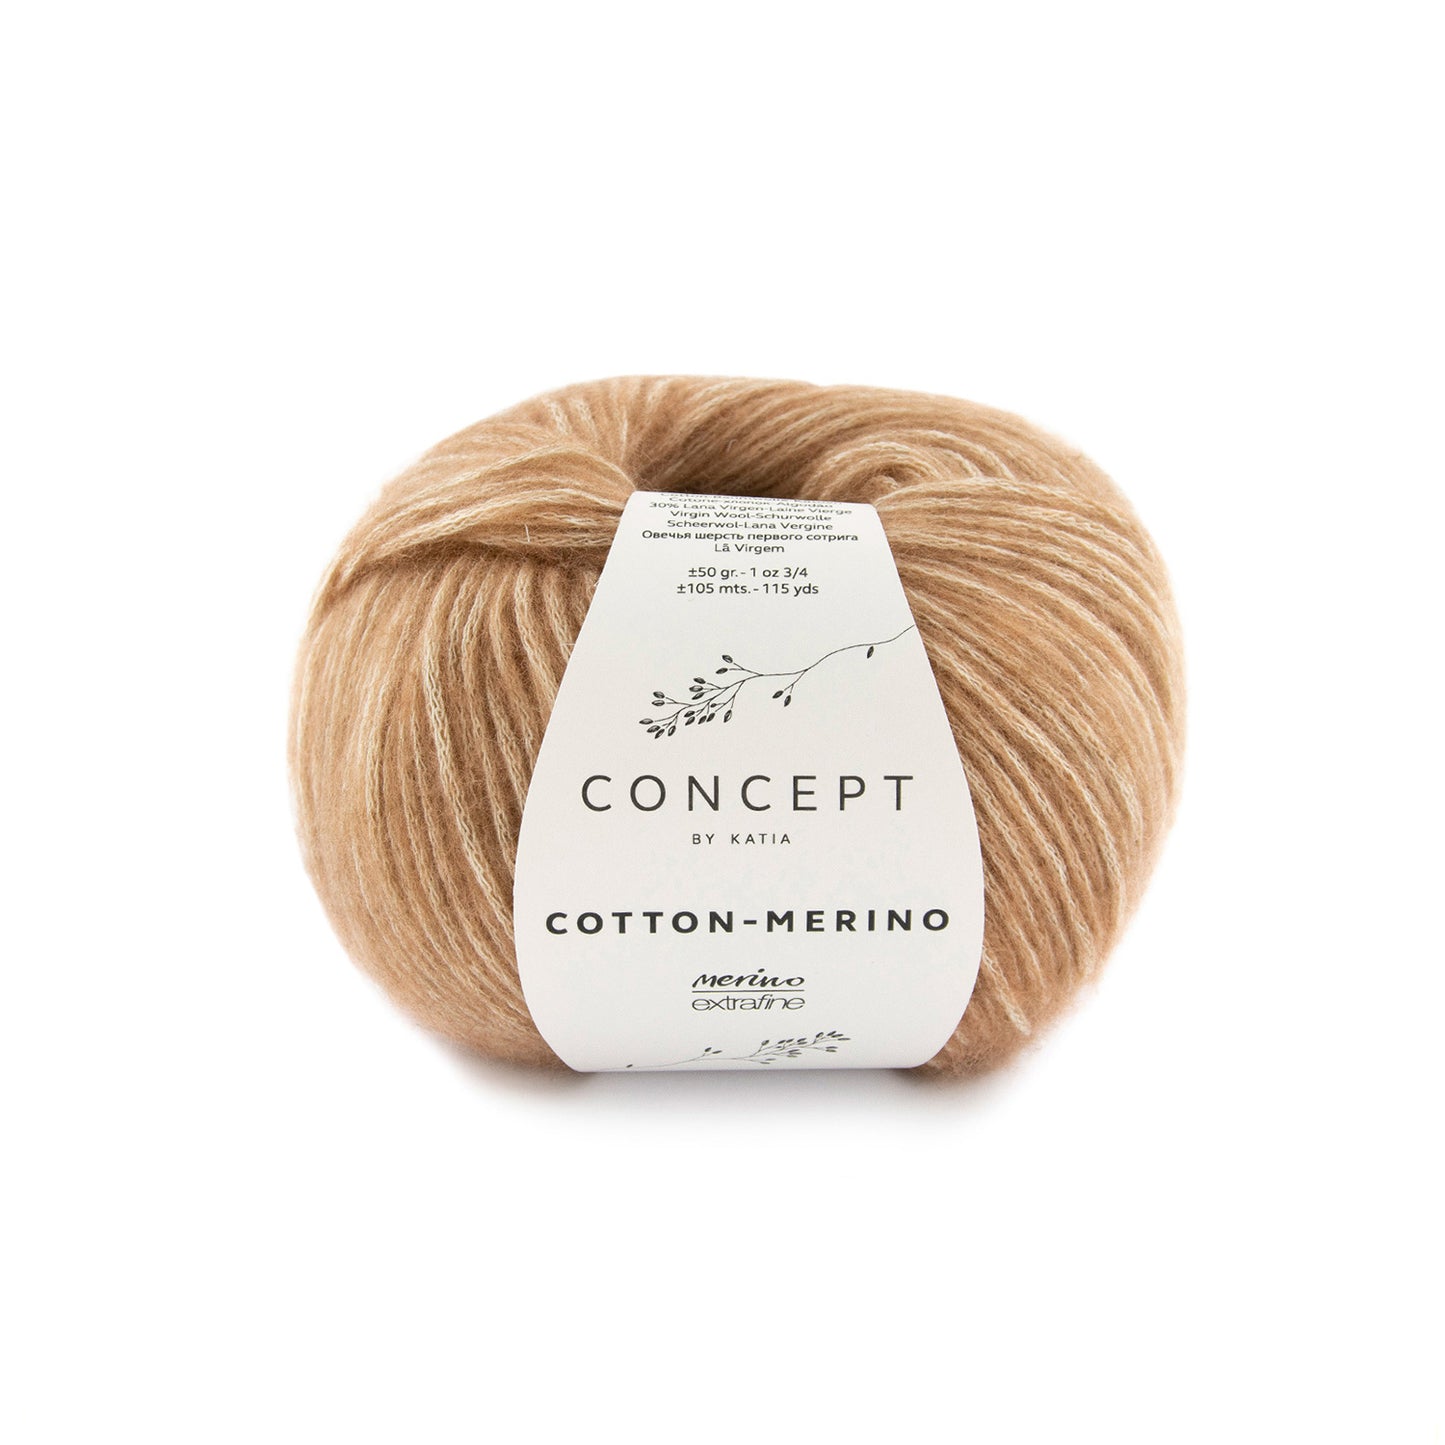 Cotton-Merino de Concept Katia